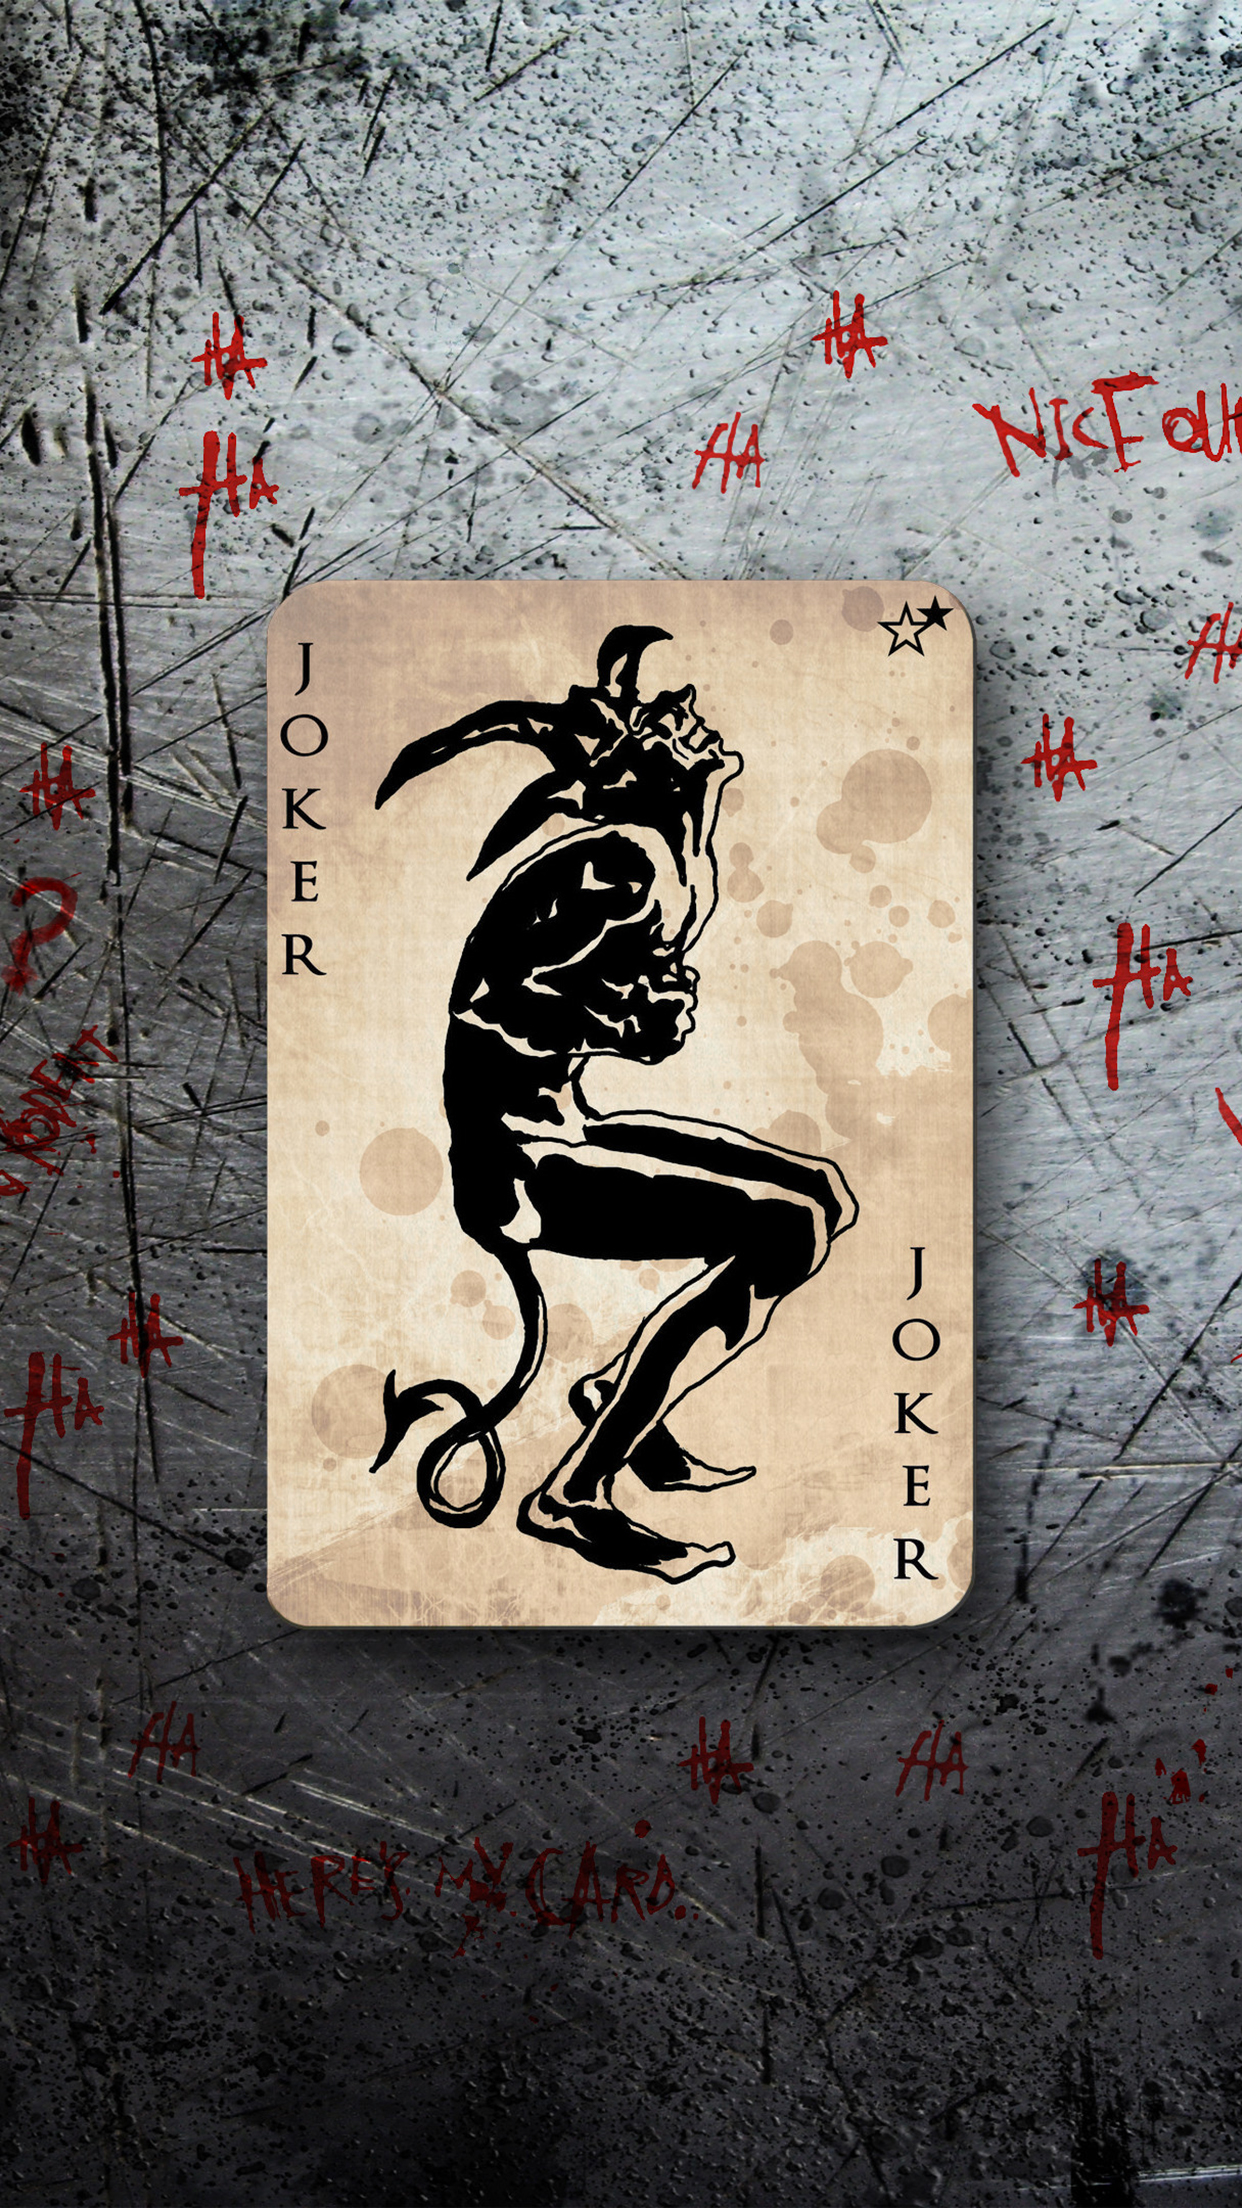 Joker card wallpaper for iphone pro max x